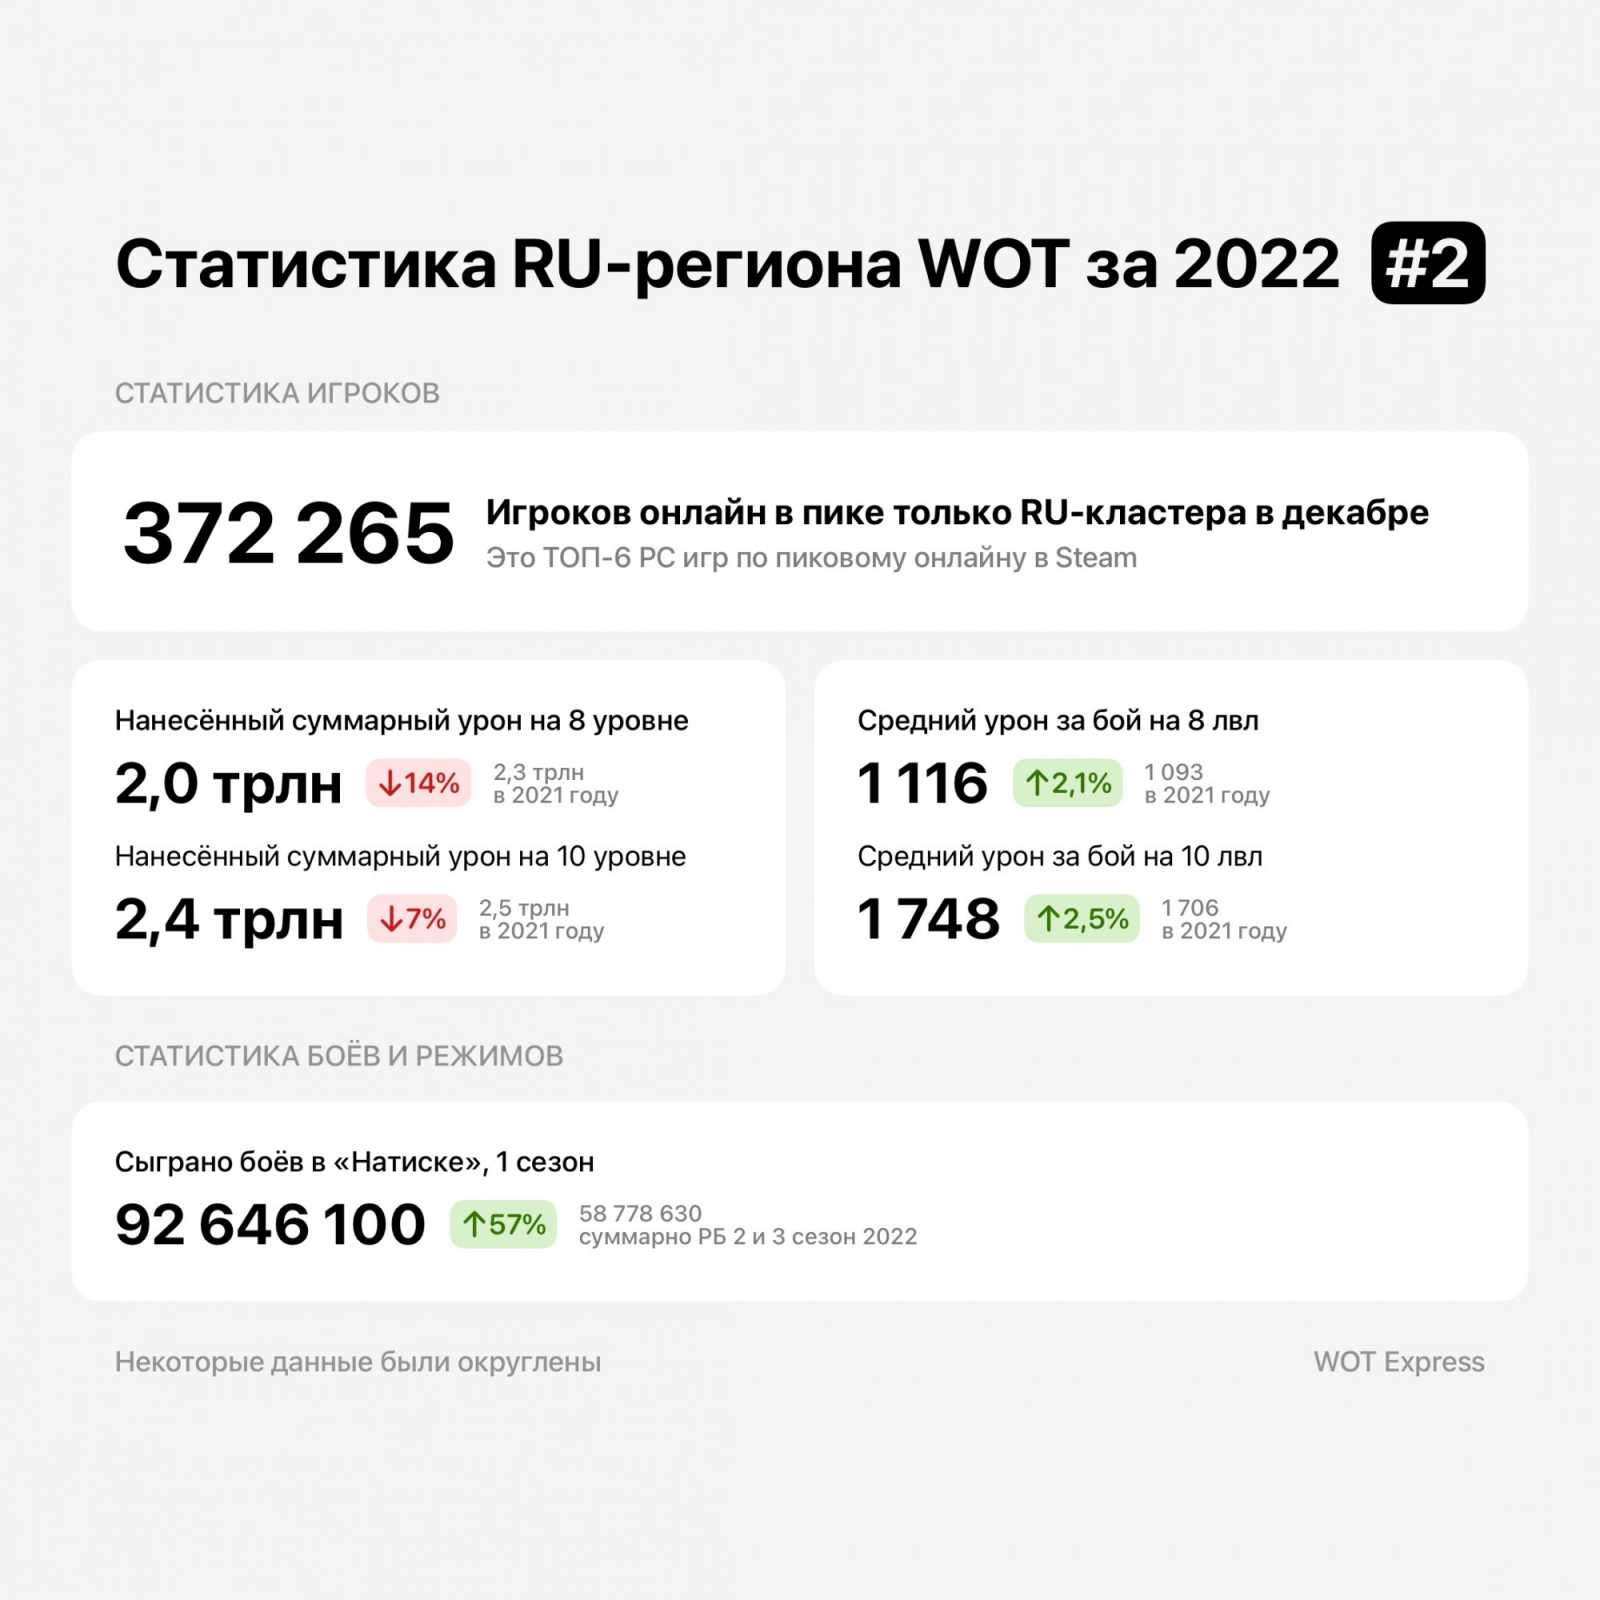 37688_statistika-mira-tankov-za-20